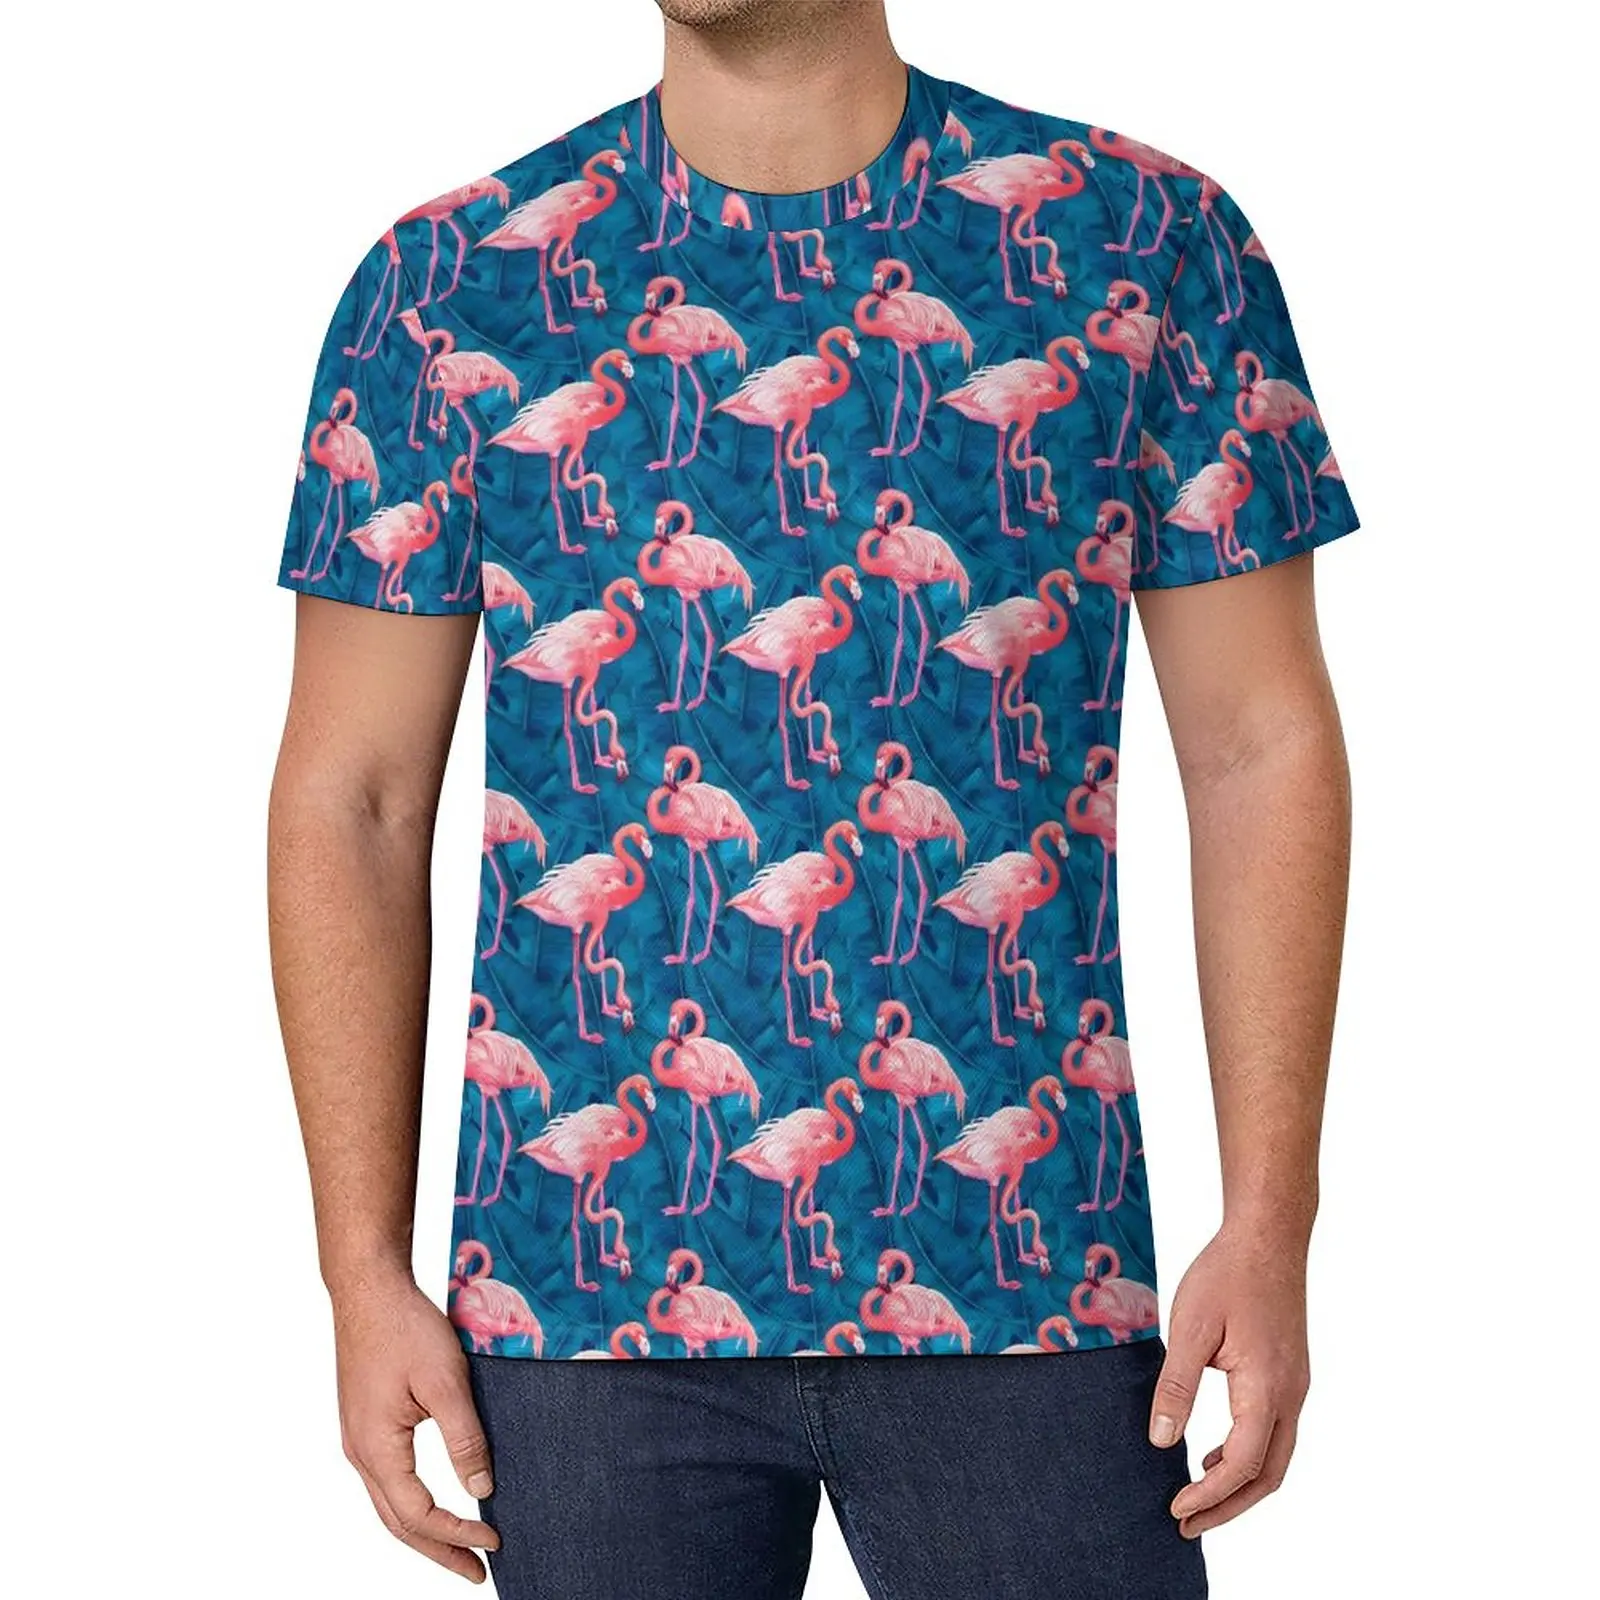 

Tropical Birds T-Shirt Man Flamingos And Leaves Kawaii T-Shirts Beach Hippie Tee Shirt Printed Big Size Clothes